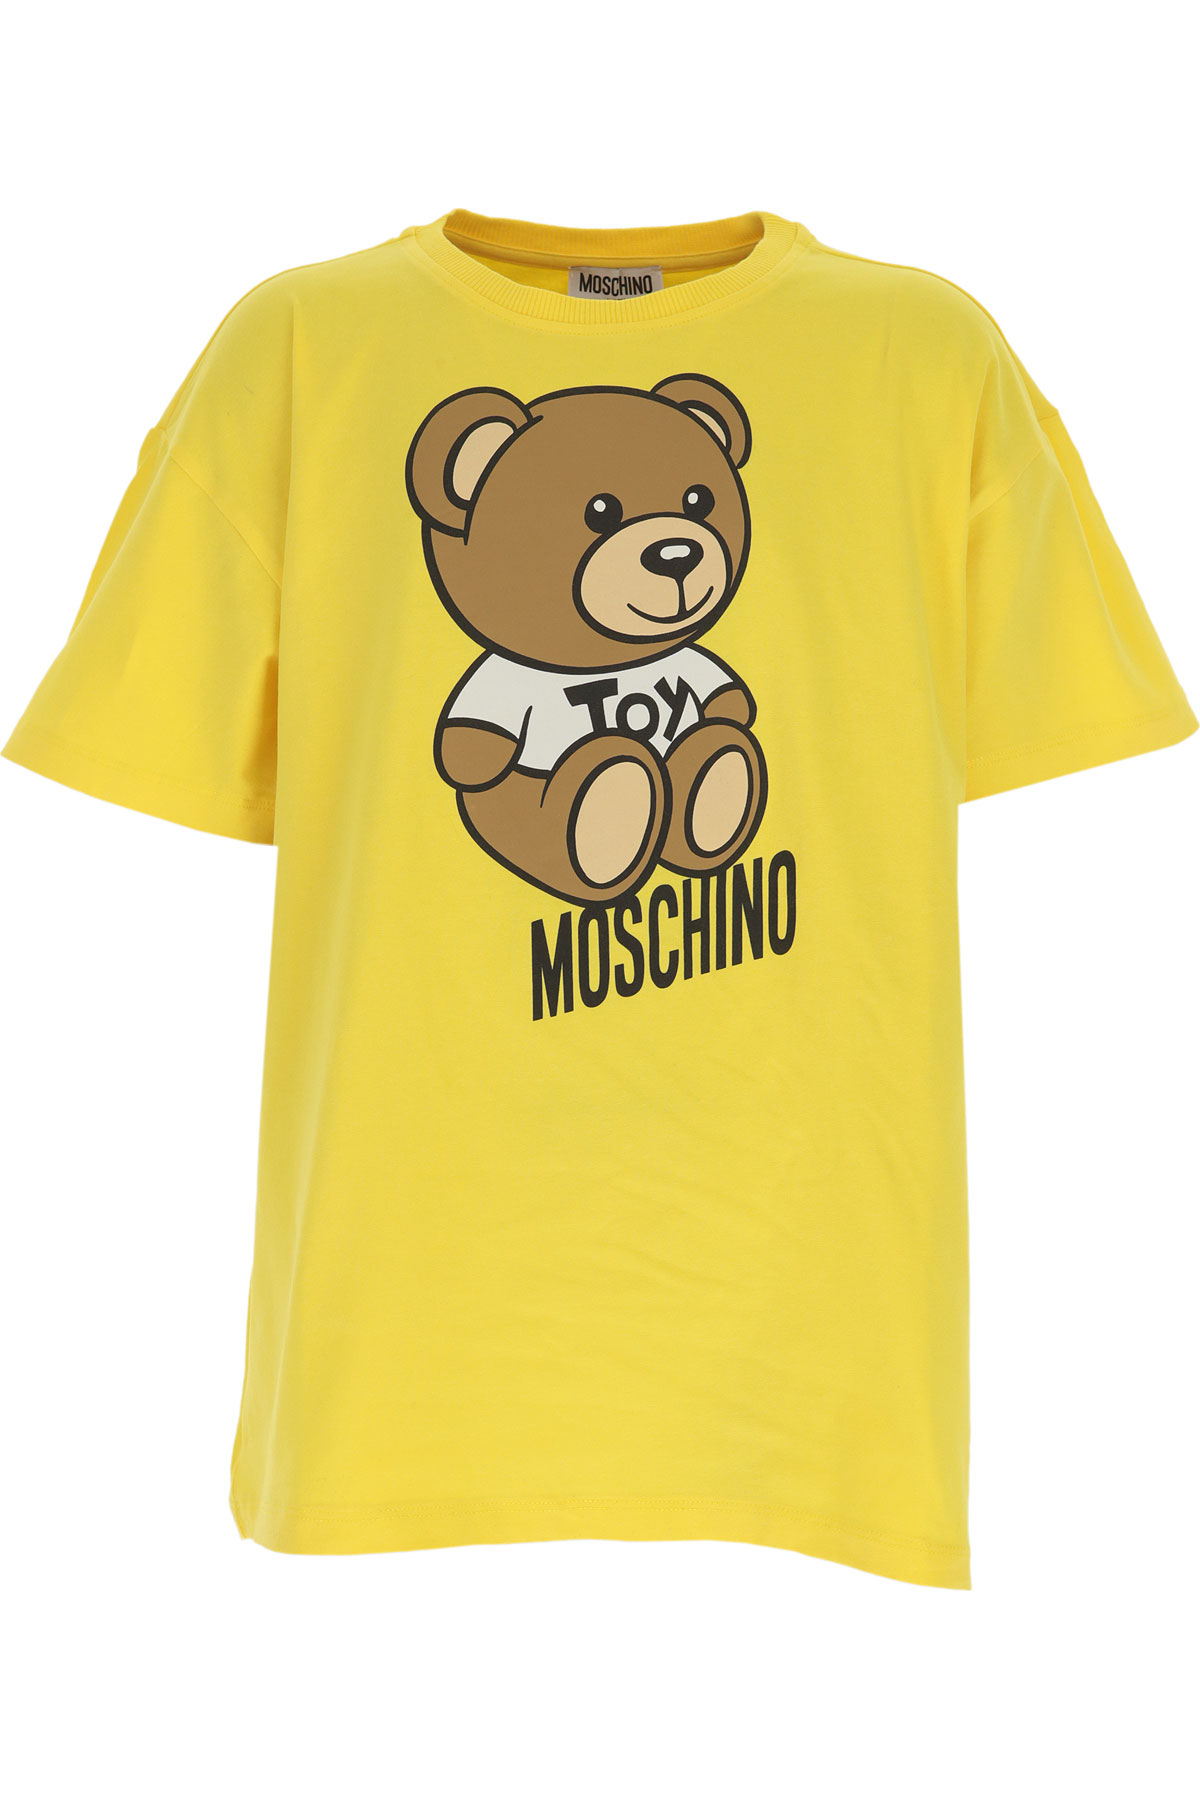 Kidswear Moschino, Style code: hmm046-lba10-50162